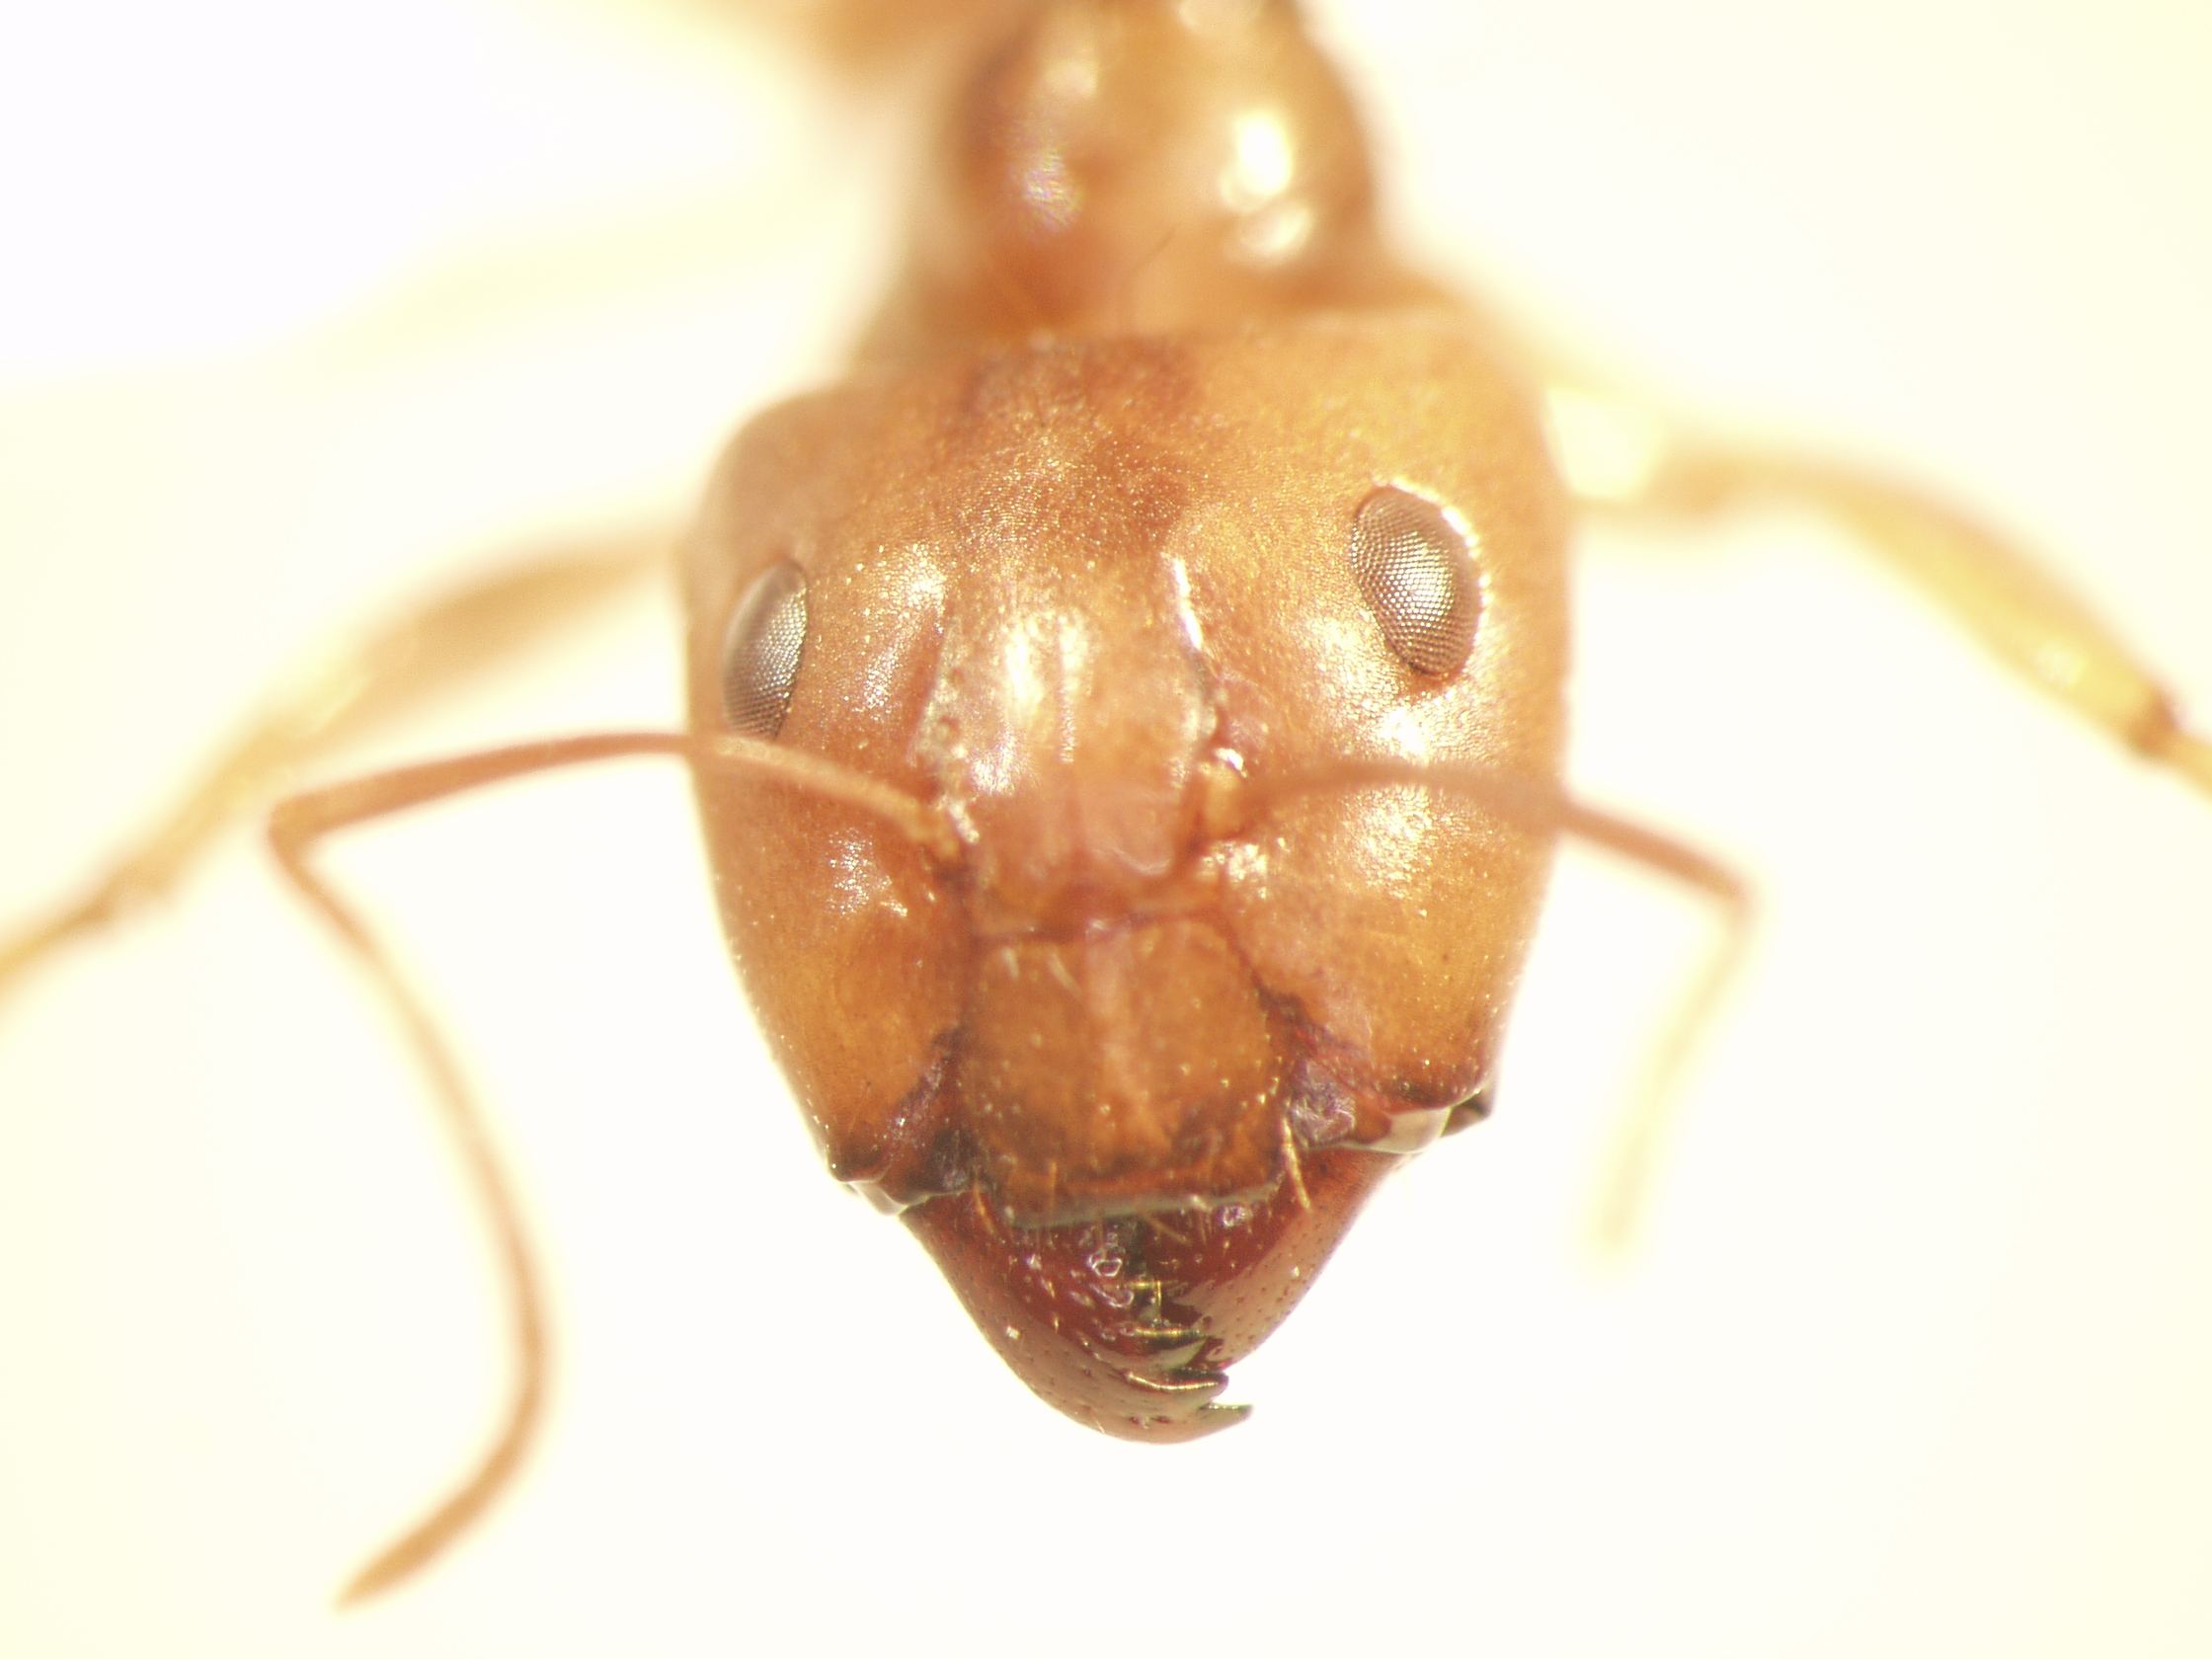 Camponotus 56 frontal